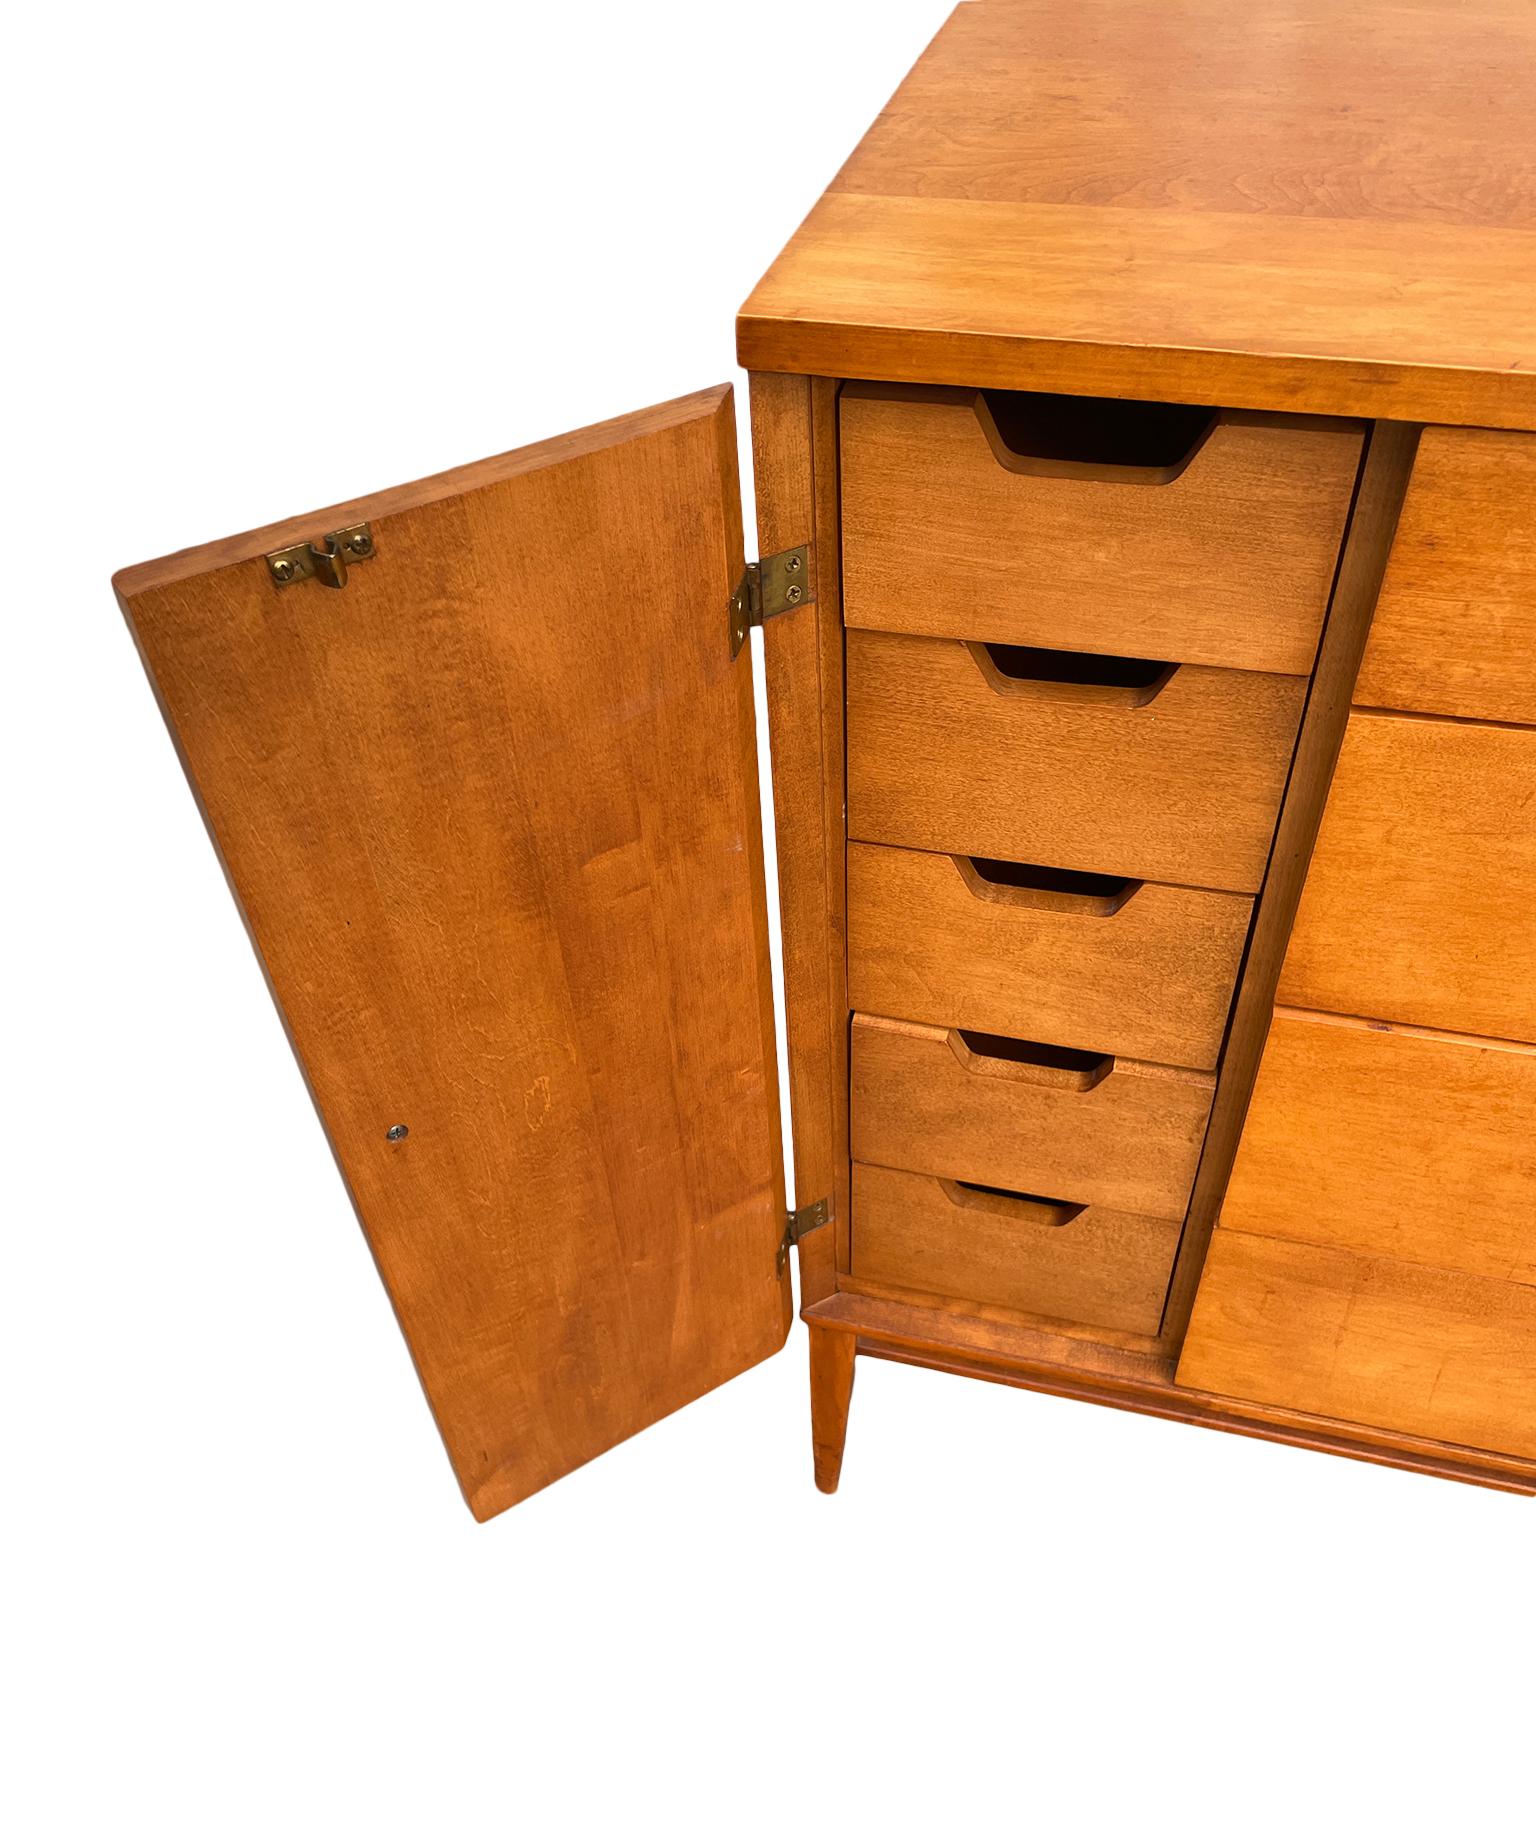 20th Century Midcentury Paul McCobb Maple 20-Drawer Dresser #1510 Tobacco Finish brass Pulls For Sale